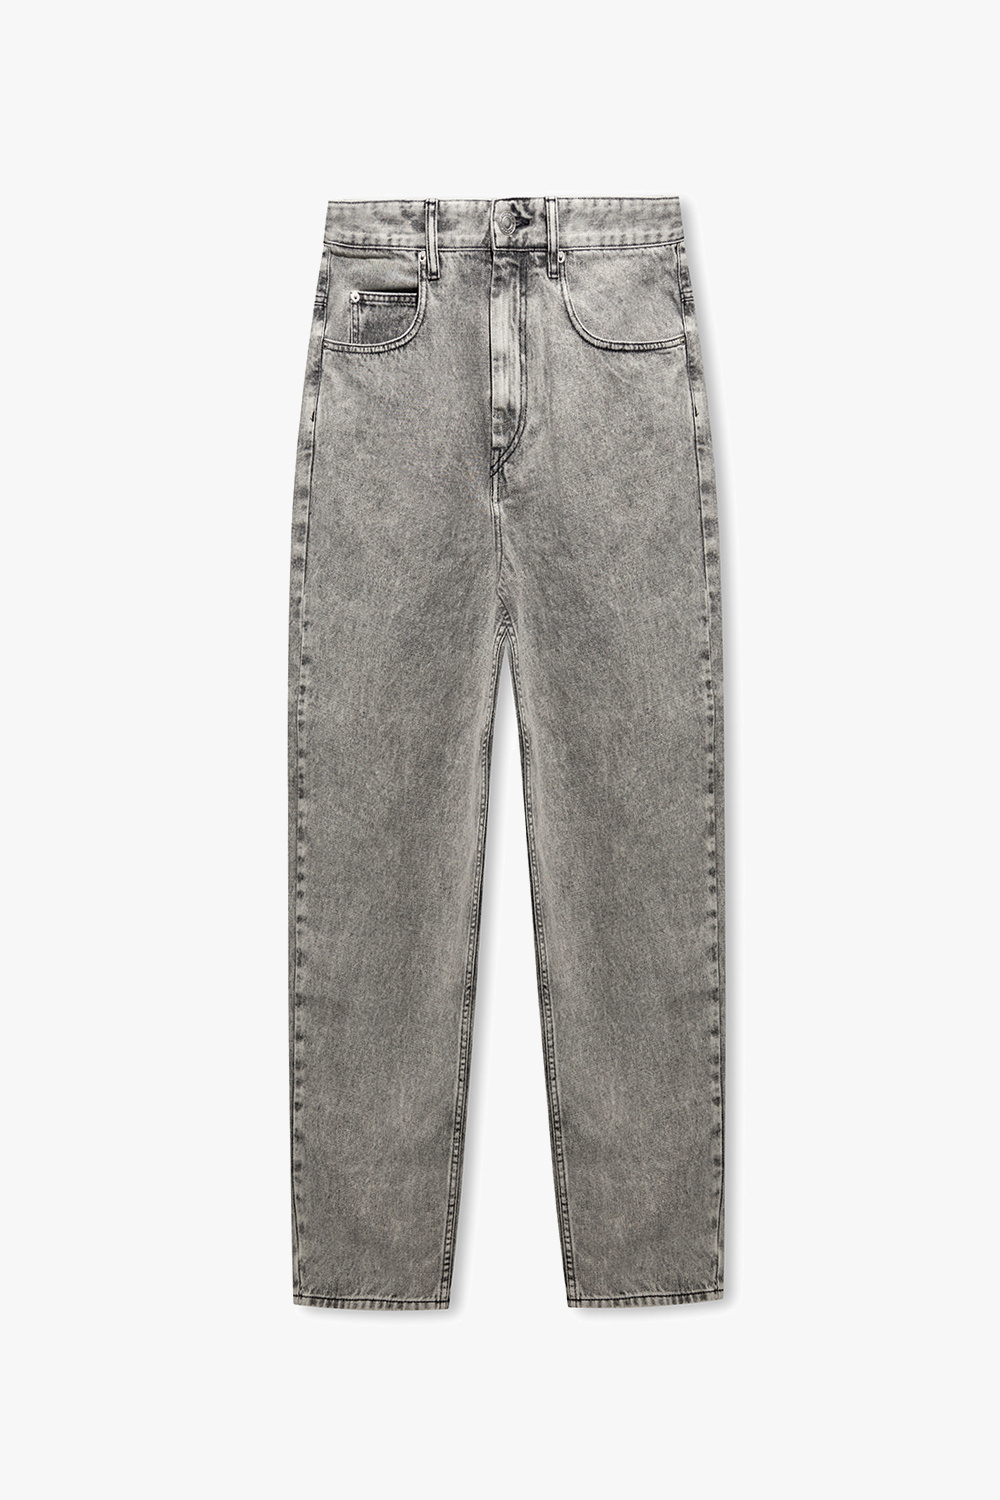 Isabel Marant ‘Larson’ tapered jeans